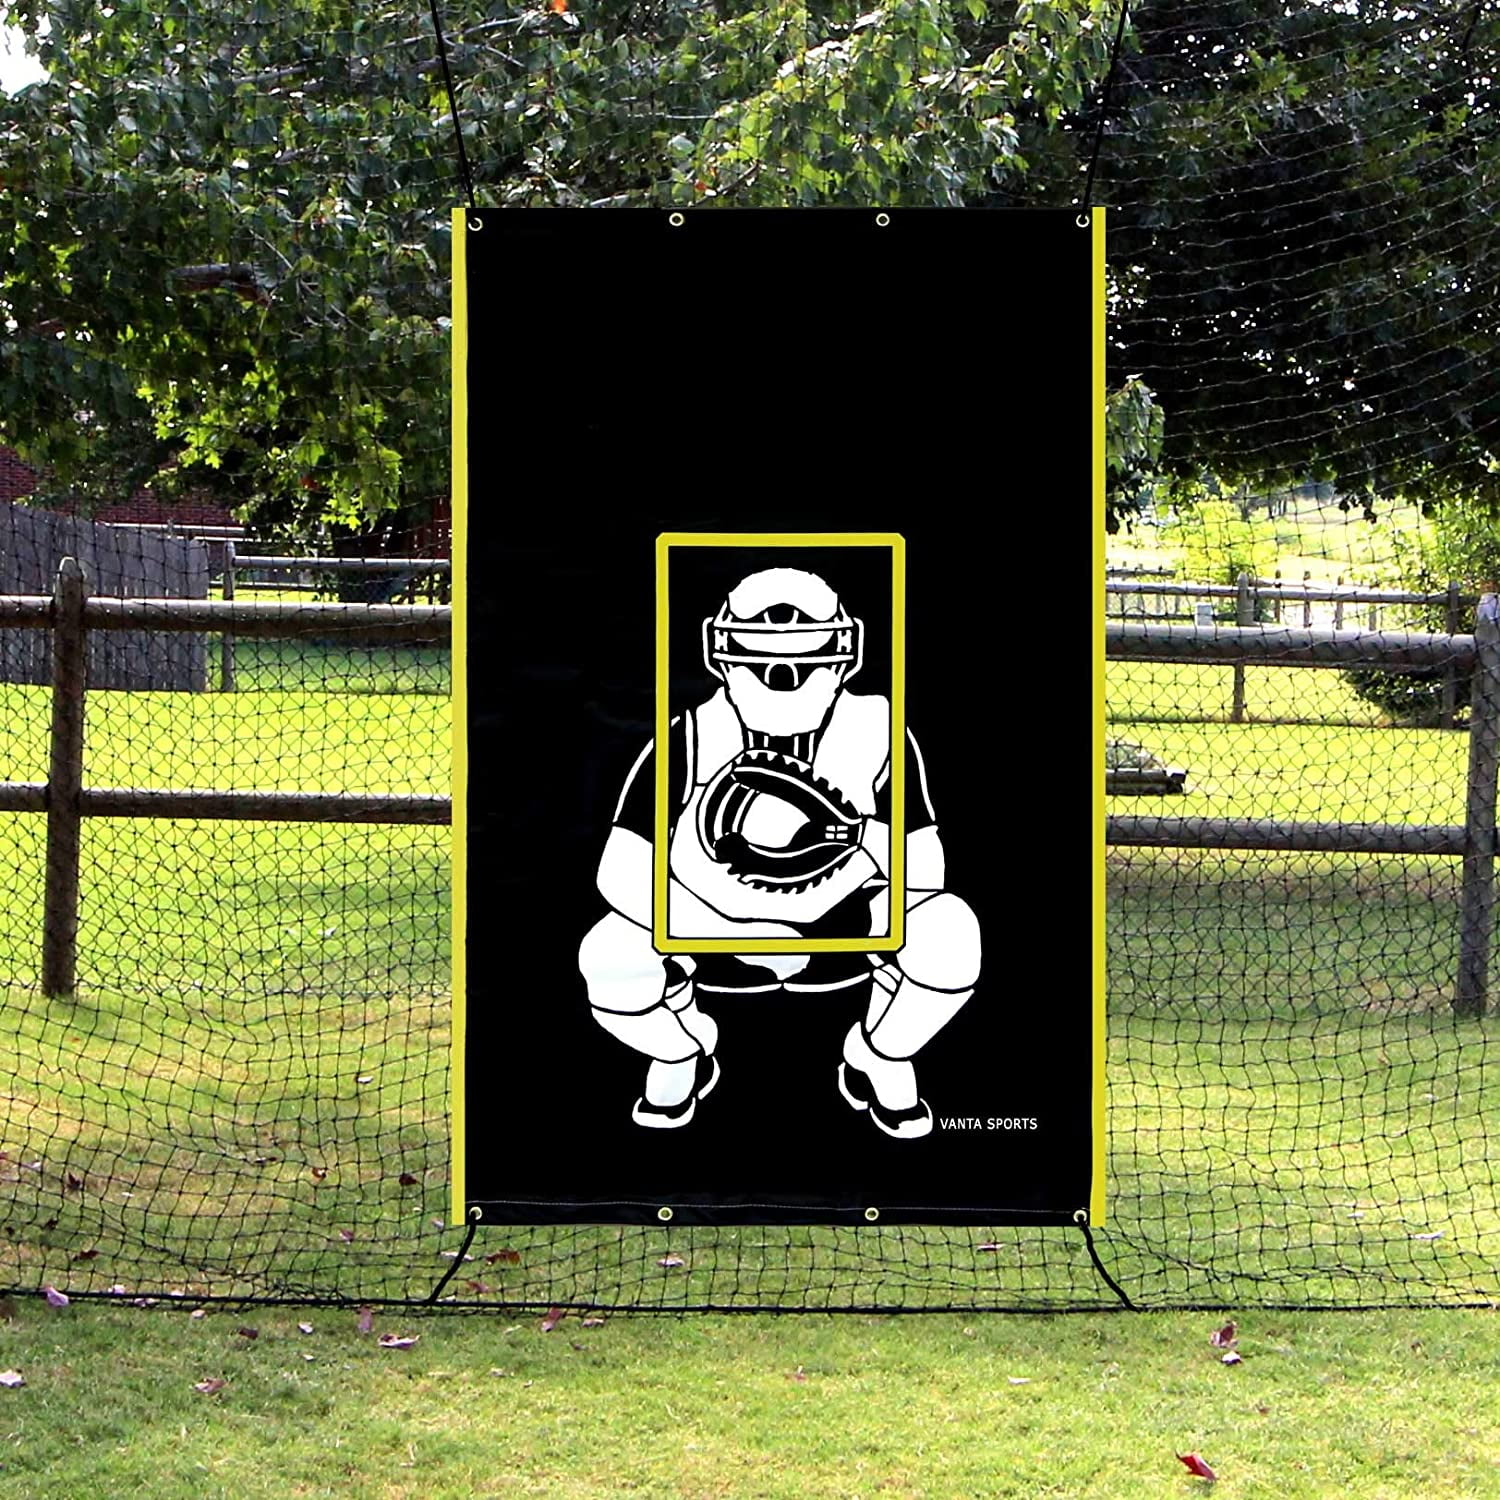 Kapler Vinyl Backstop Baseball/Softball Backstop Batting Cage Target with Bungees for Batting Hitting Pitching 6x8 